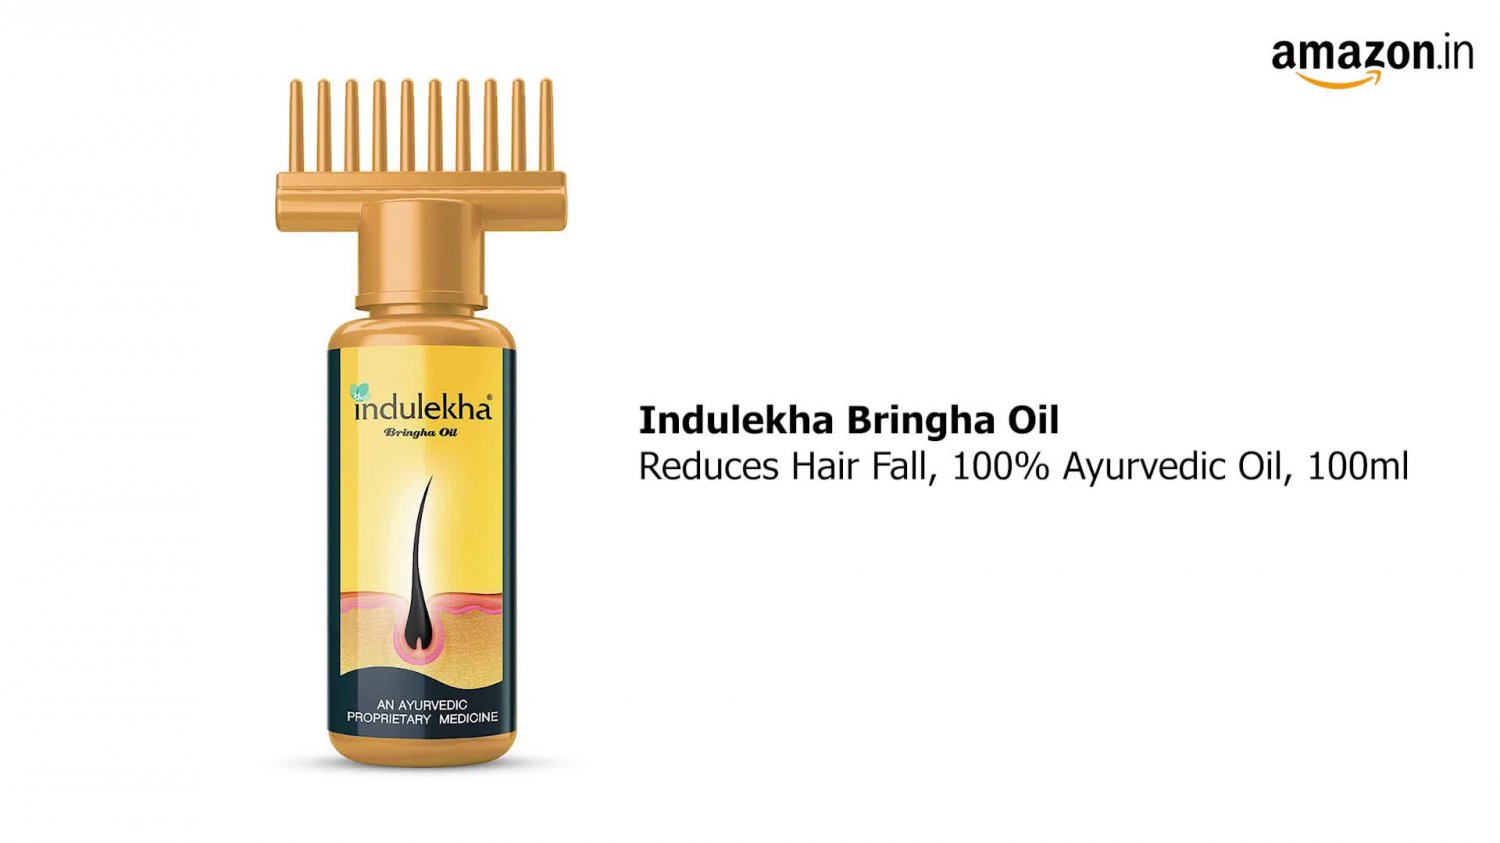 Indulekha Bringha Oil, Reduces Hair Fall and Grows New Hair, Ayurvedic Oil, 100ml